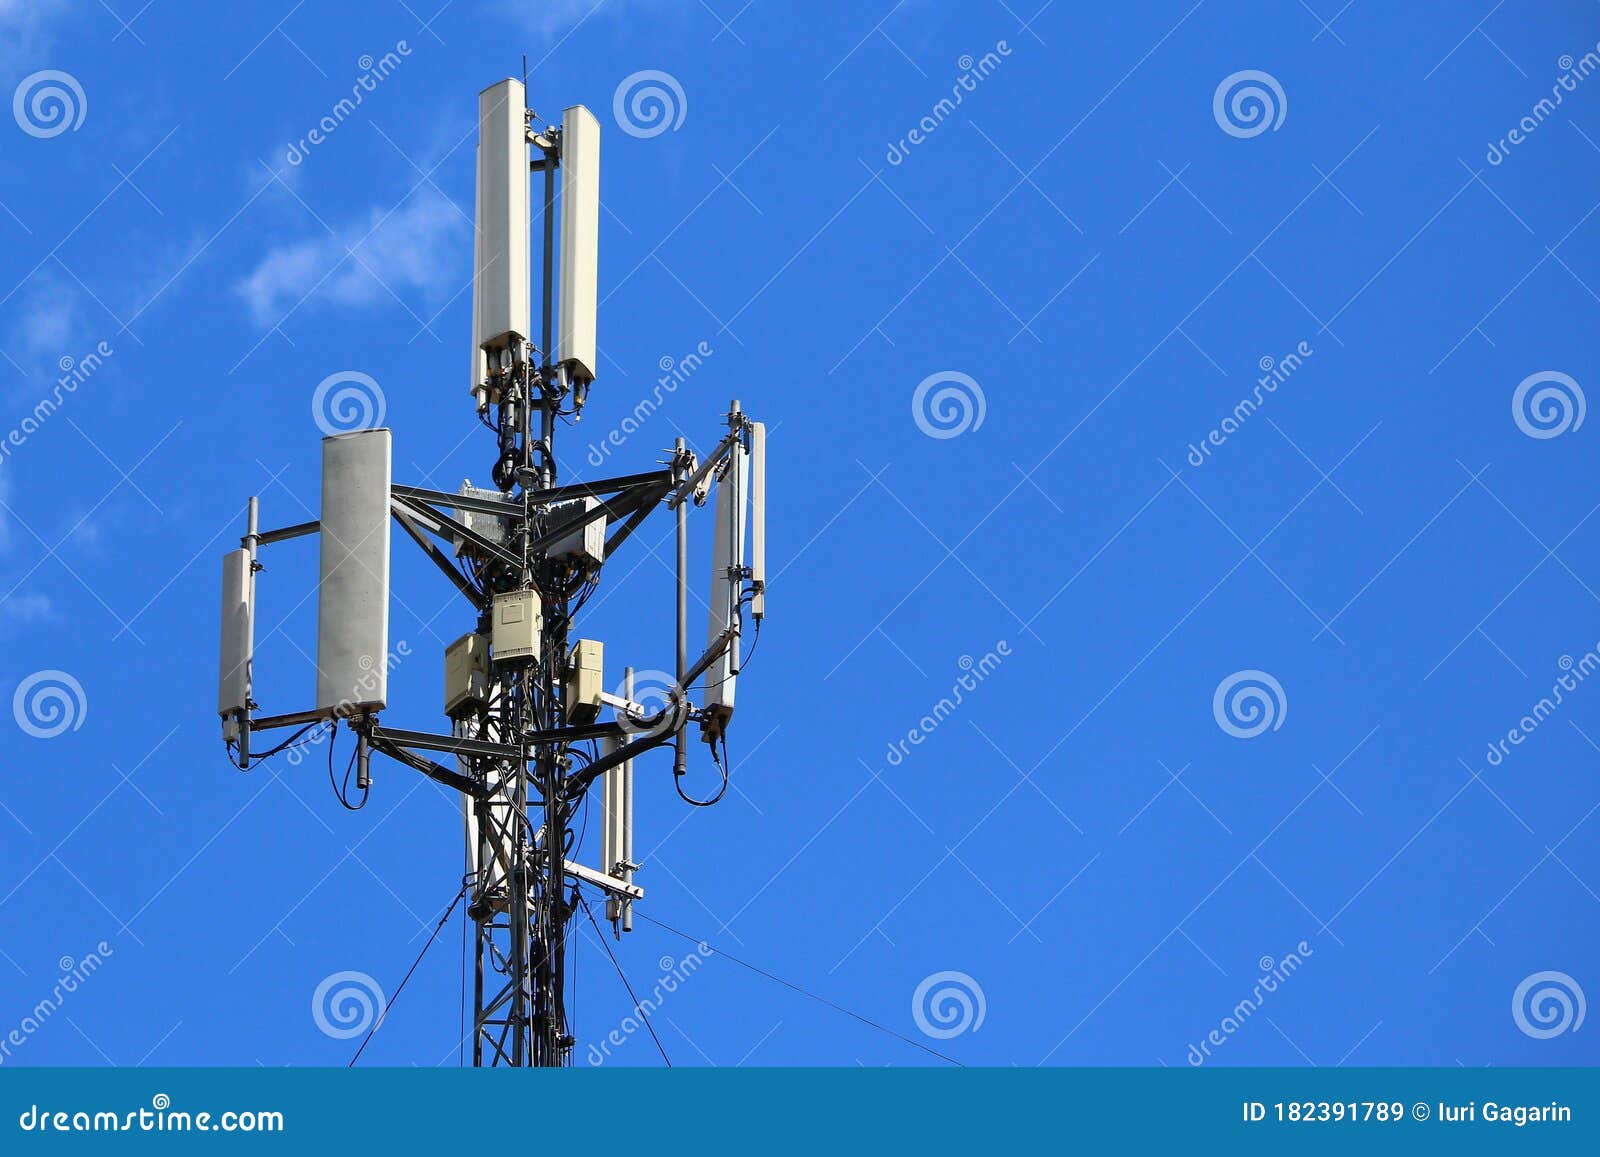 5g mobile phone tower. high speed broadband